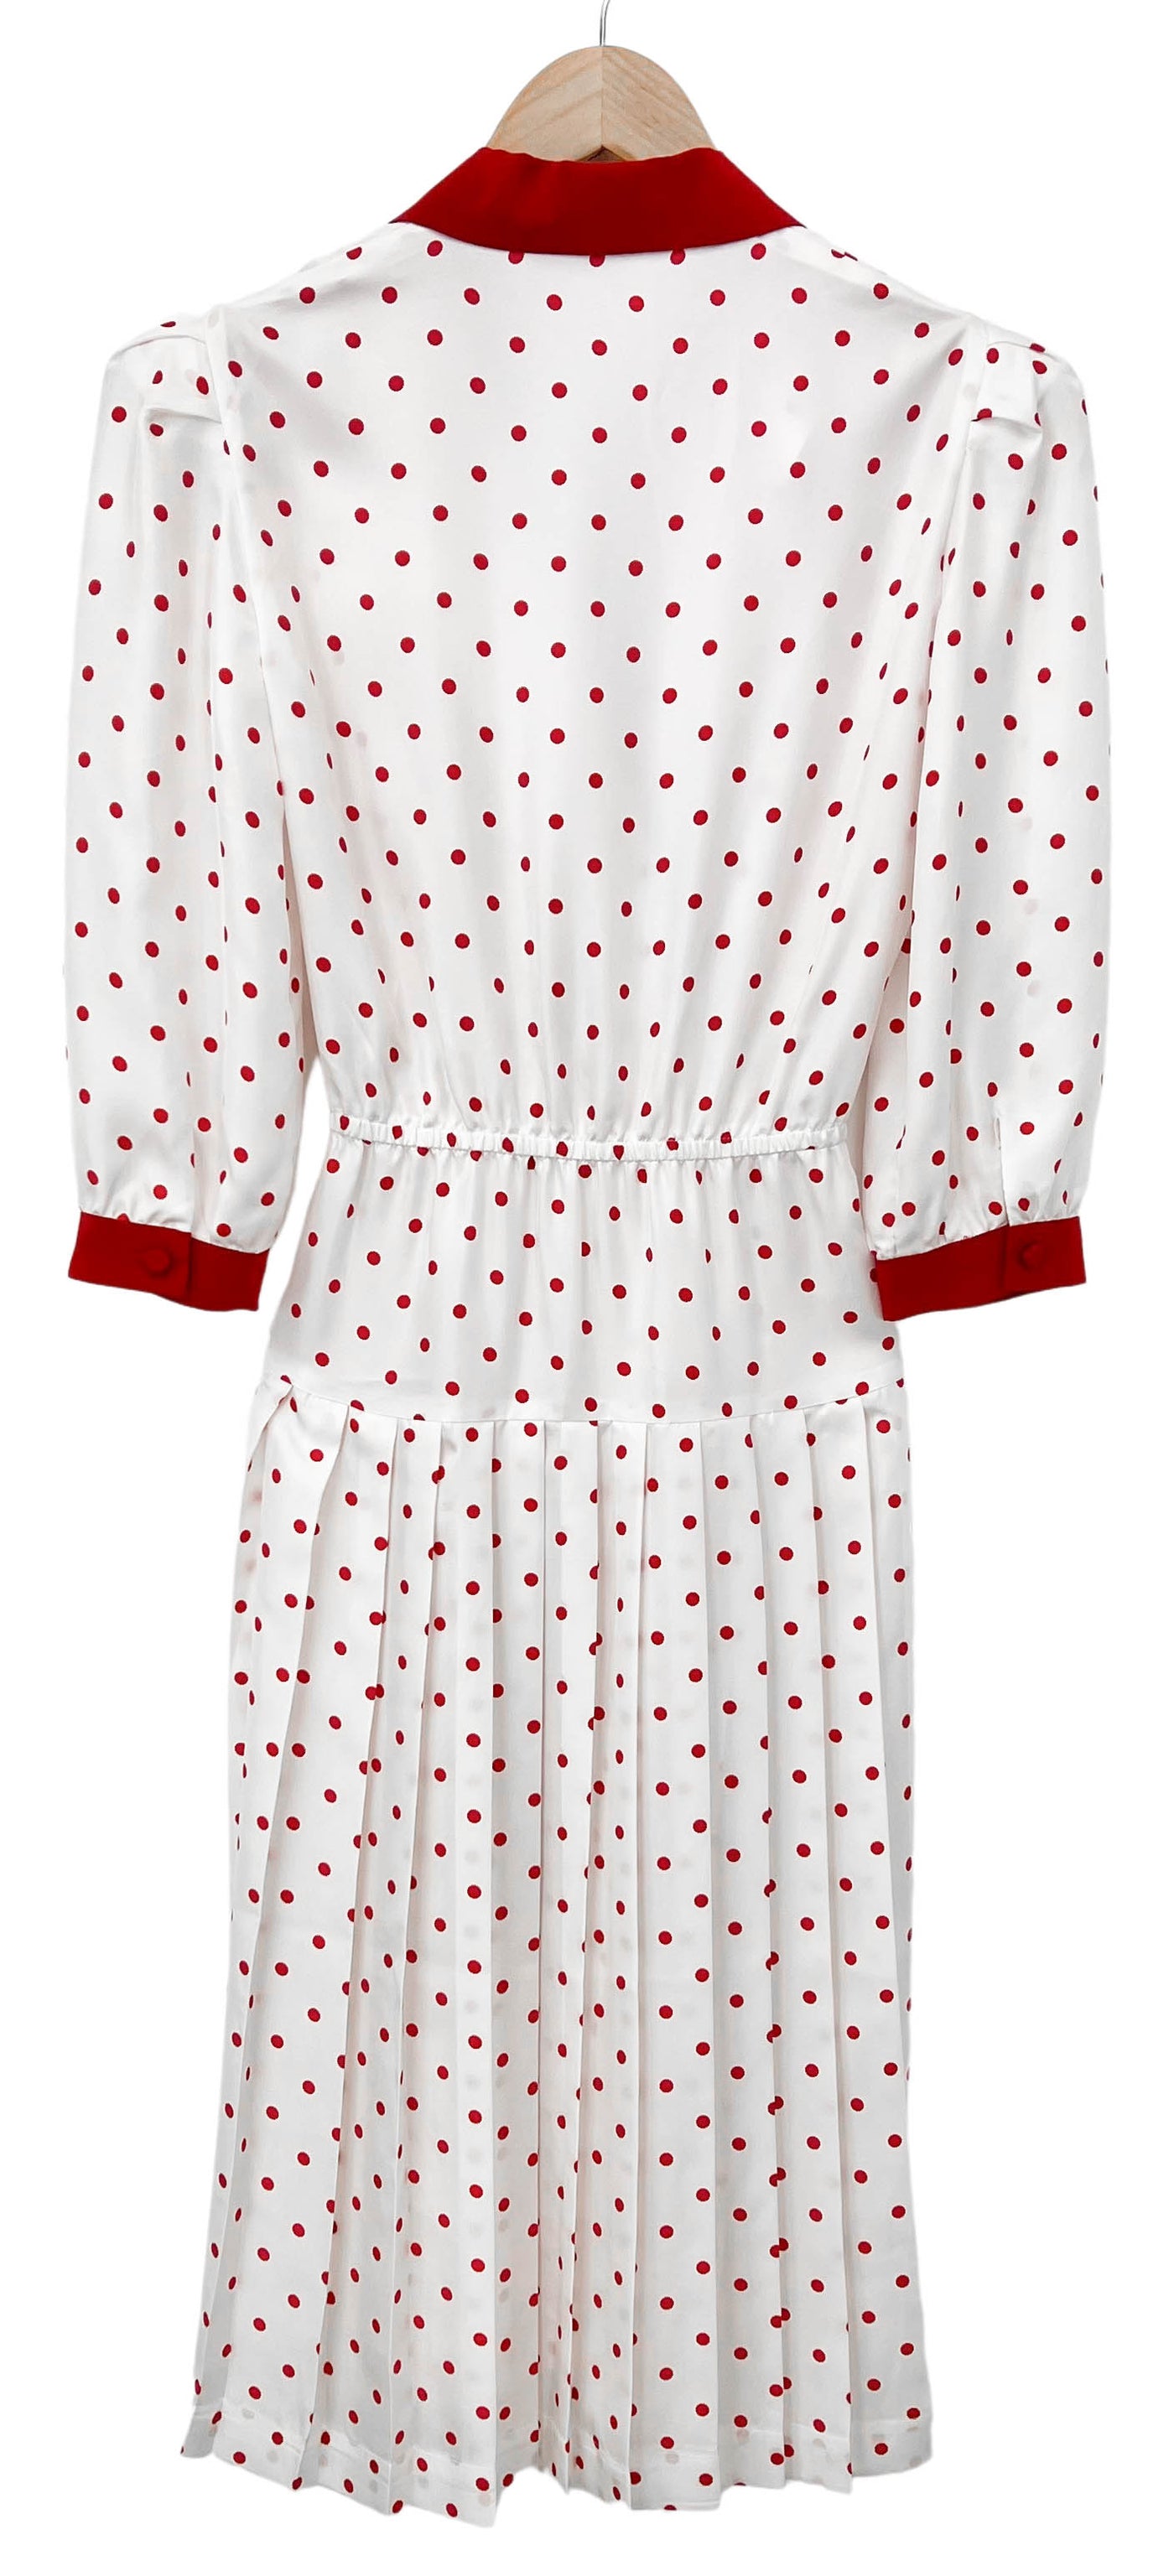 Rodarte Polka Dot Midi Dress in White and Red - Discounts on Rodarte at UAL